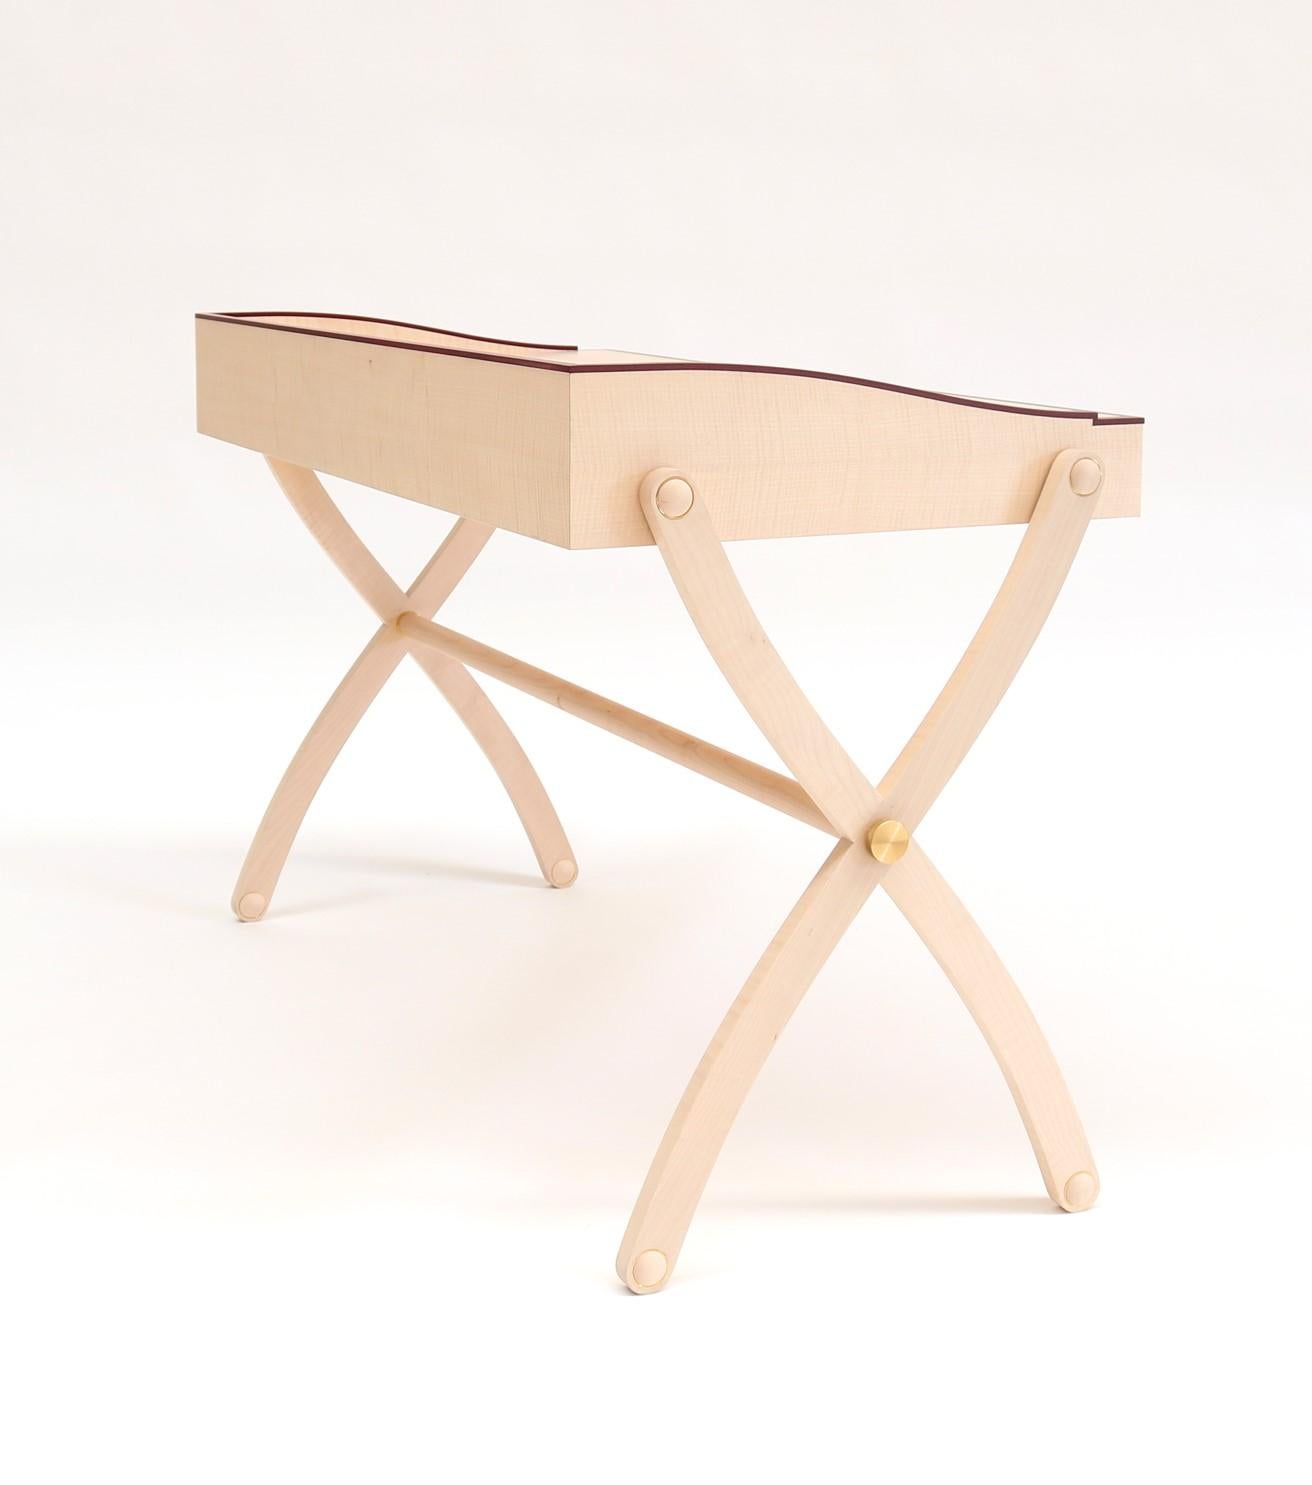 Italian Marguerite Contemporary design Maple Wood Writing Desk by Giordano Viganò